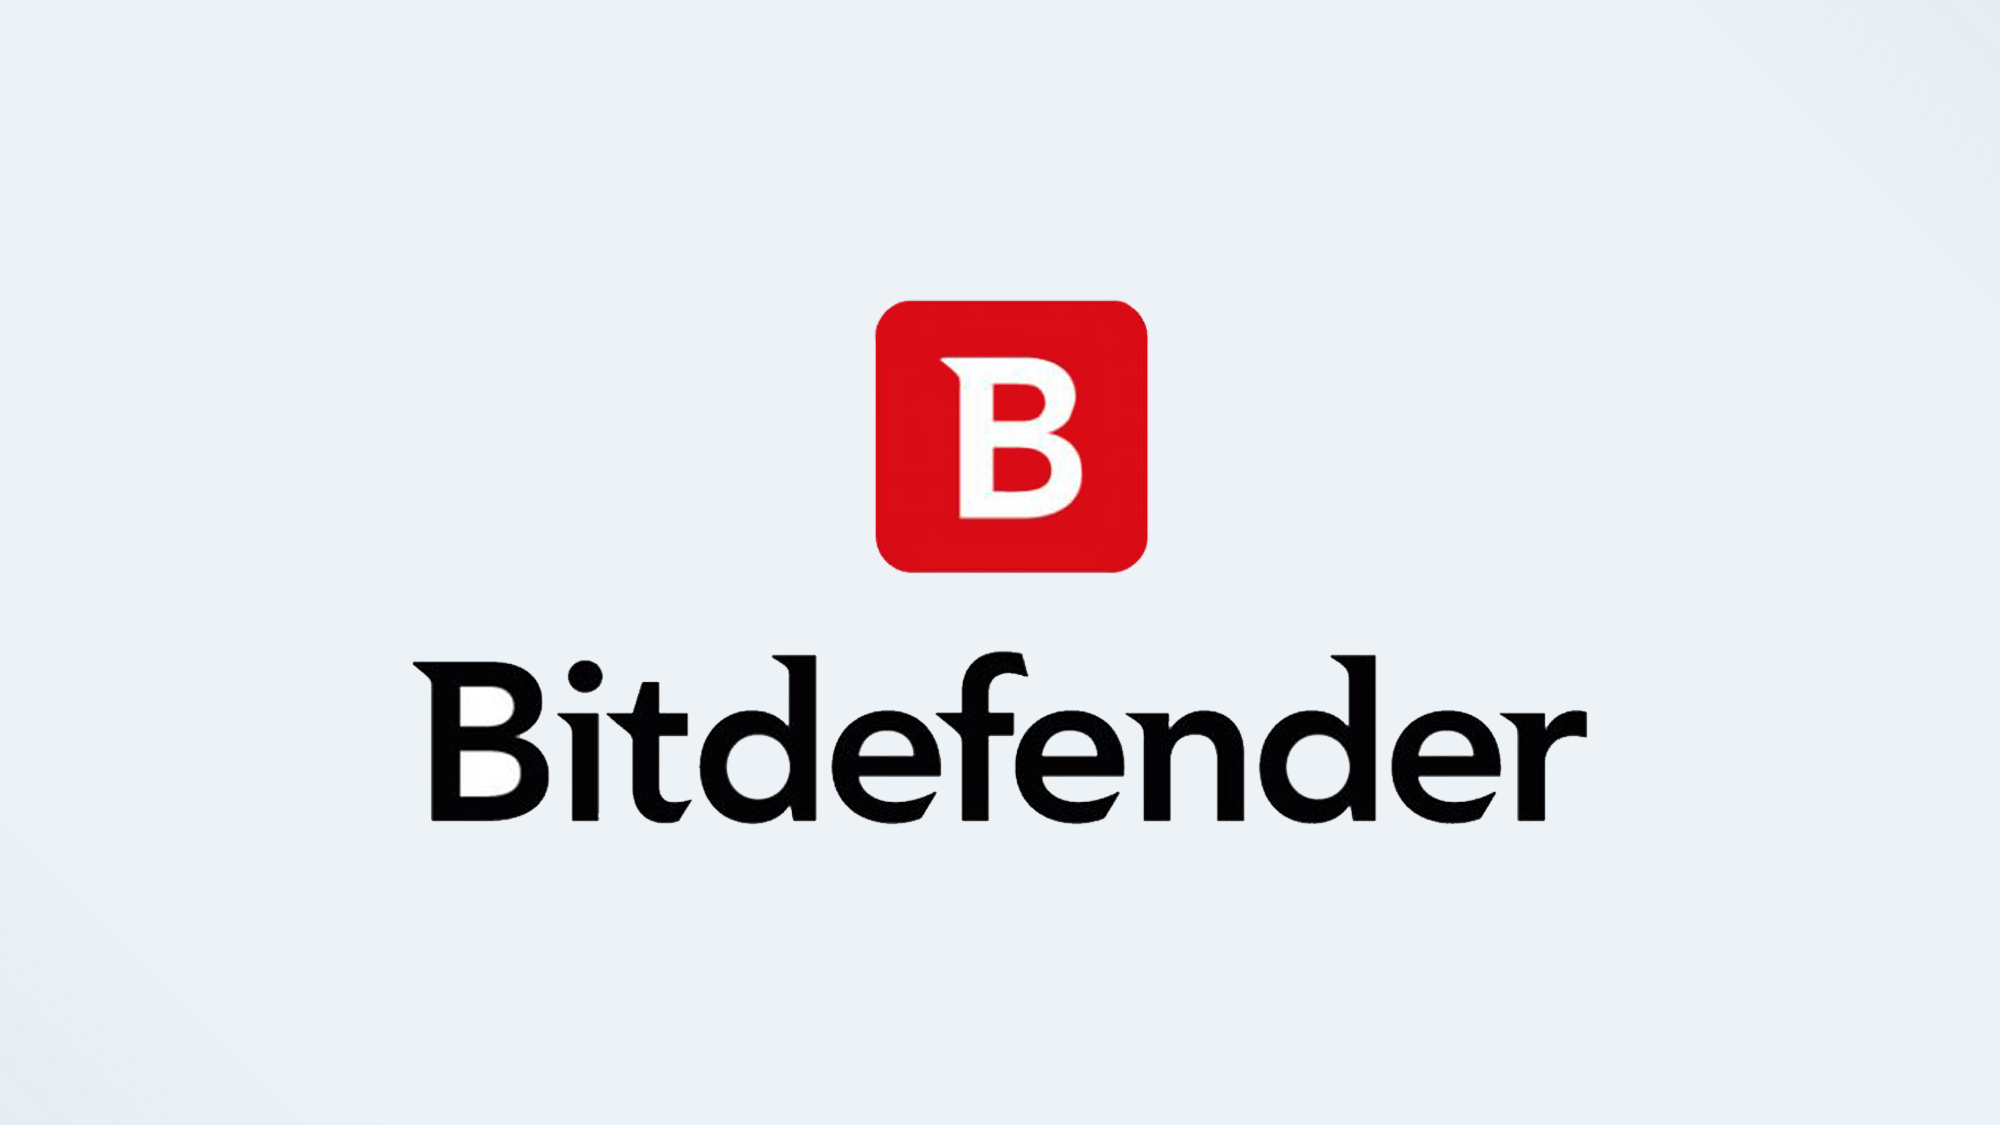 2.🥈 Bitdefender — Advanced antivirus engine & anti-phishing tools with low system impact. 